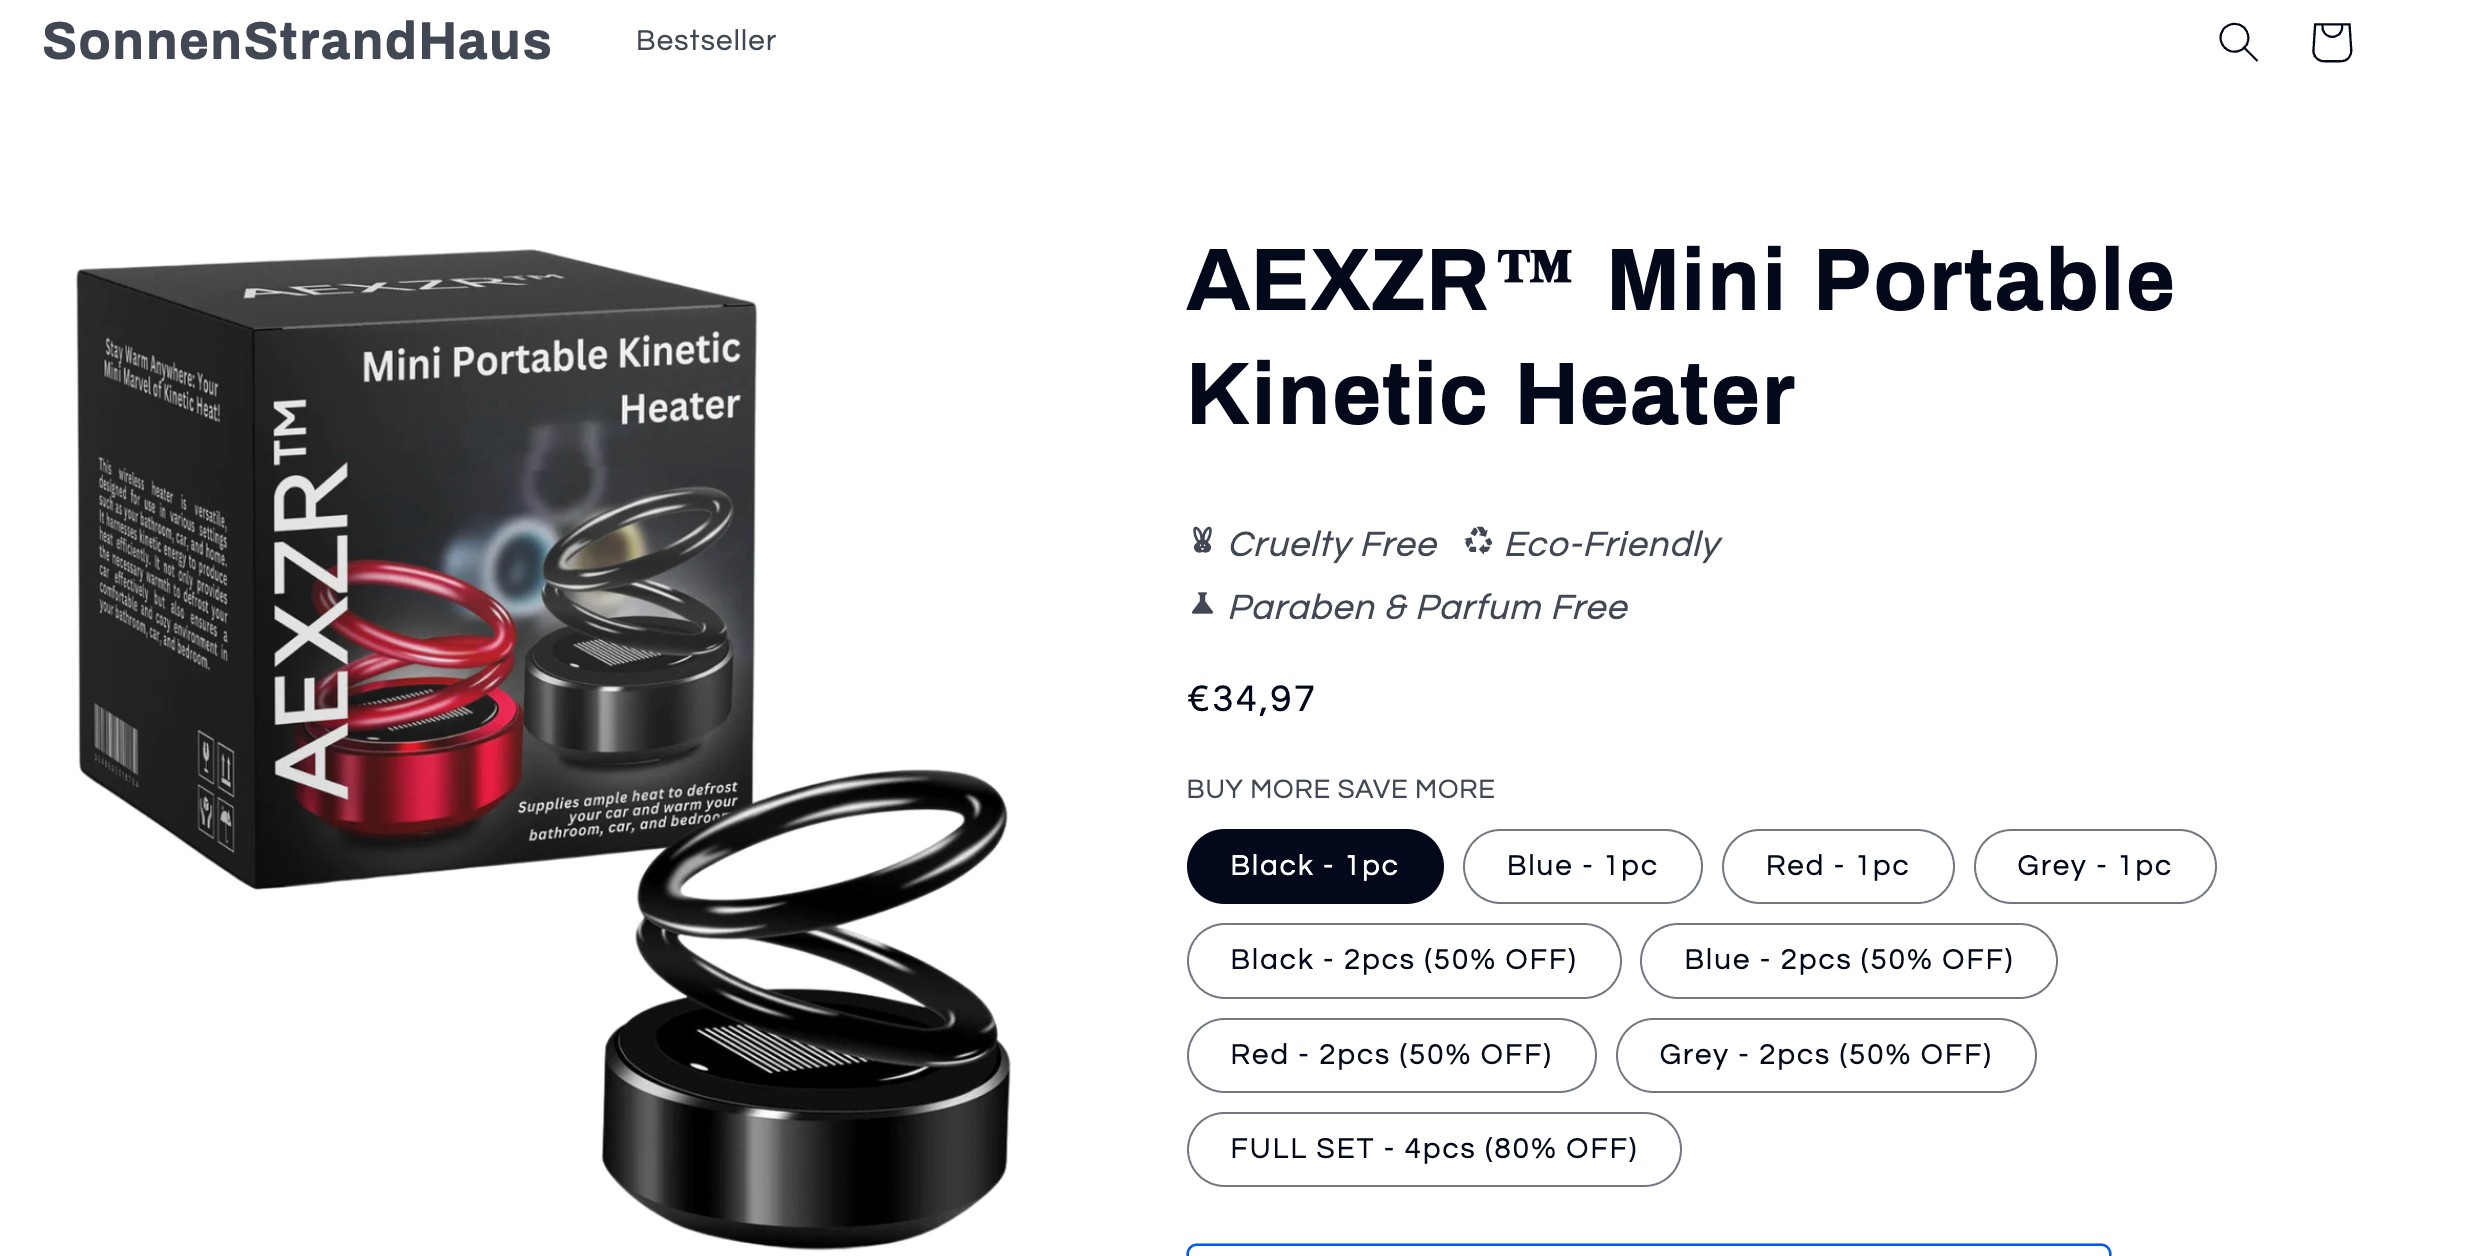 Mini Portable Kinetic Heater scam explained 